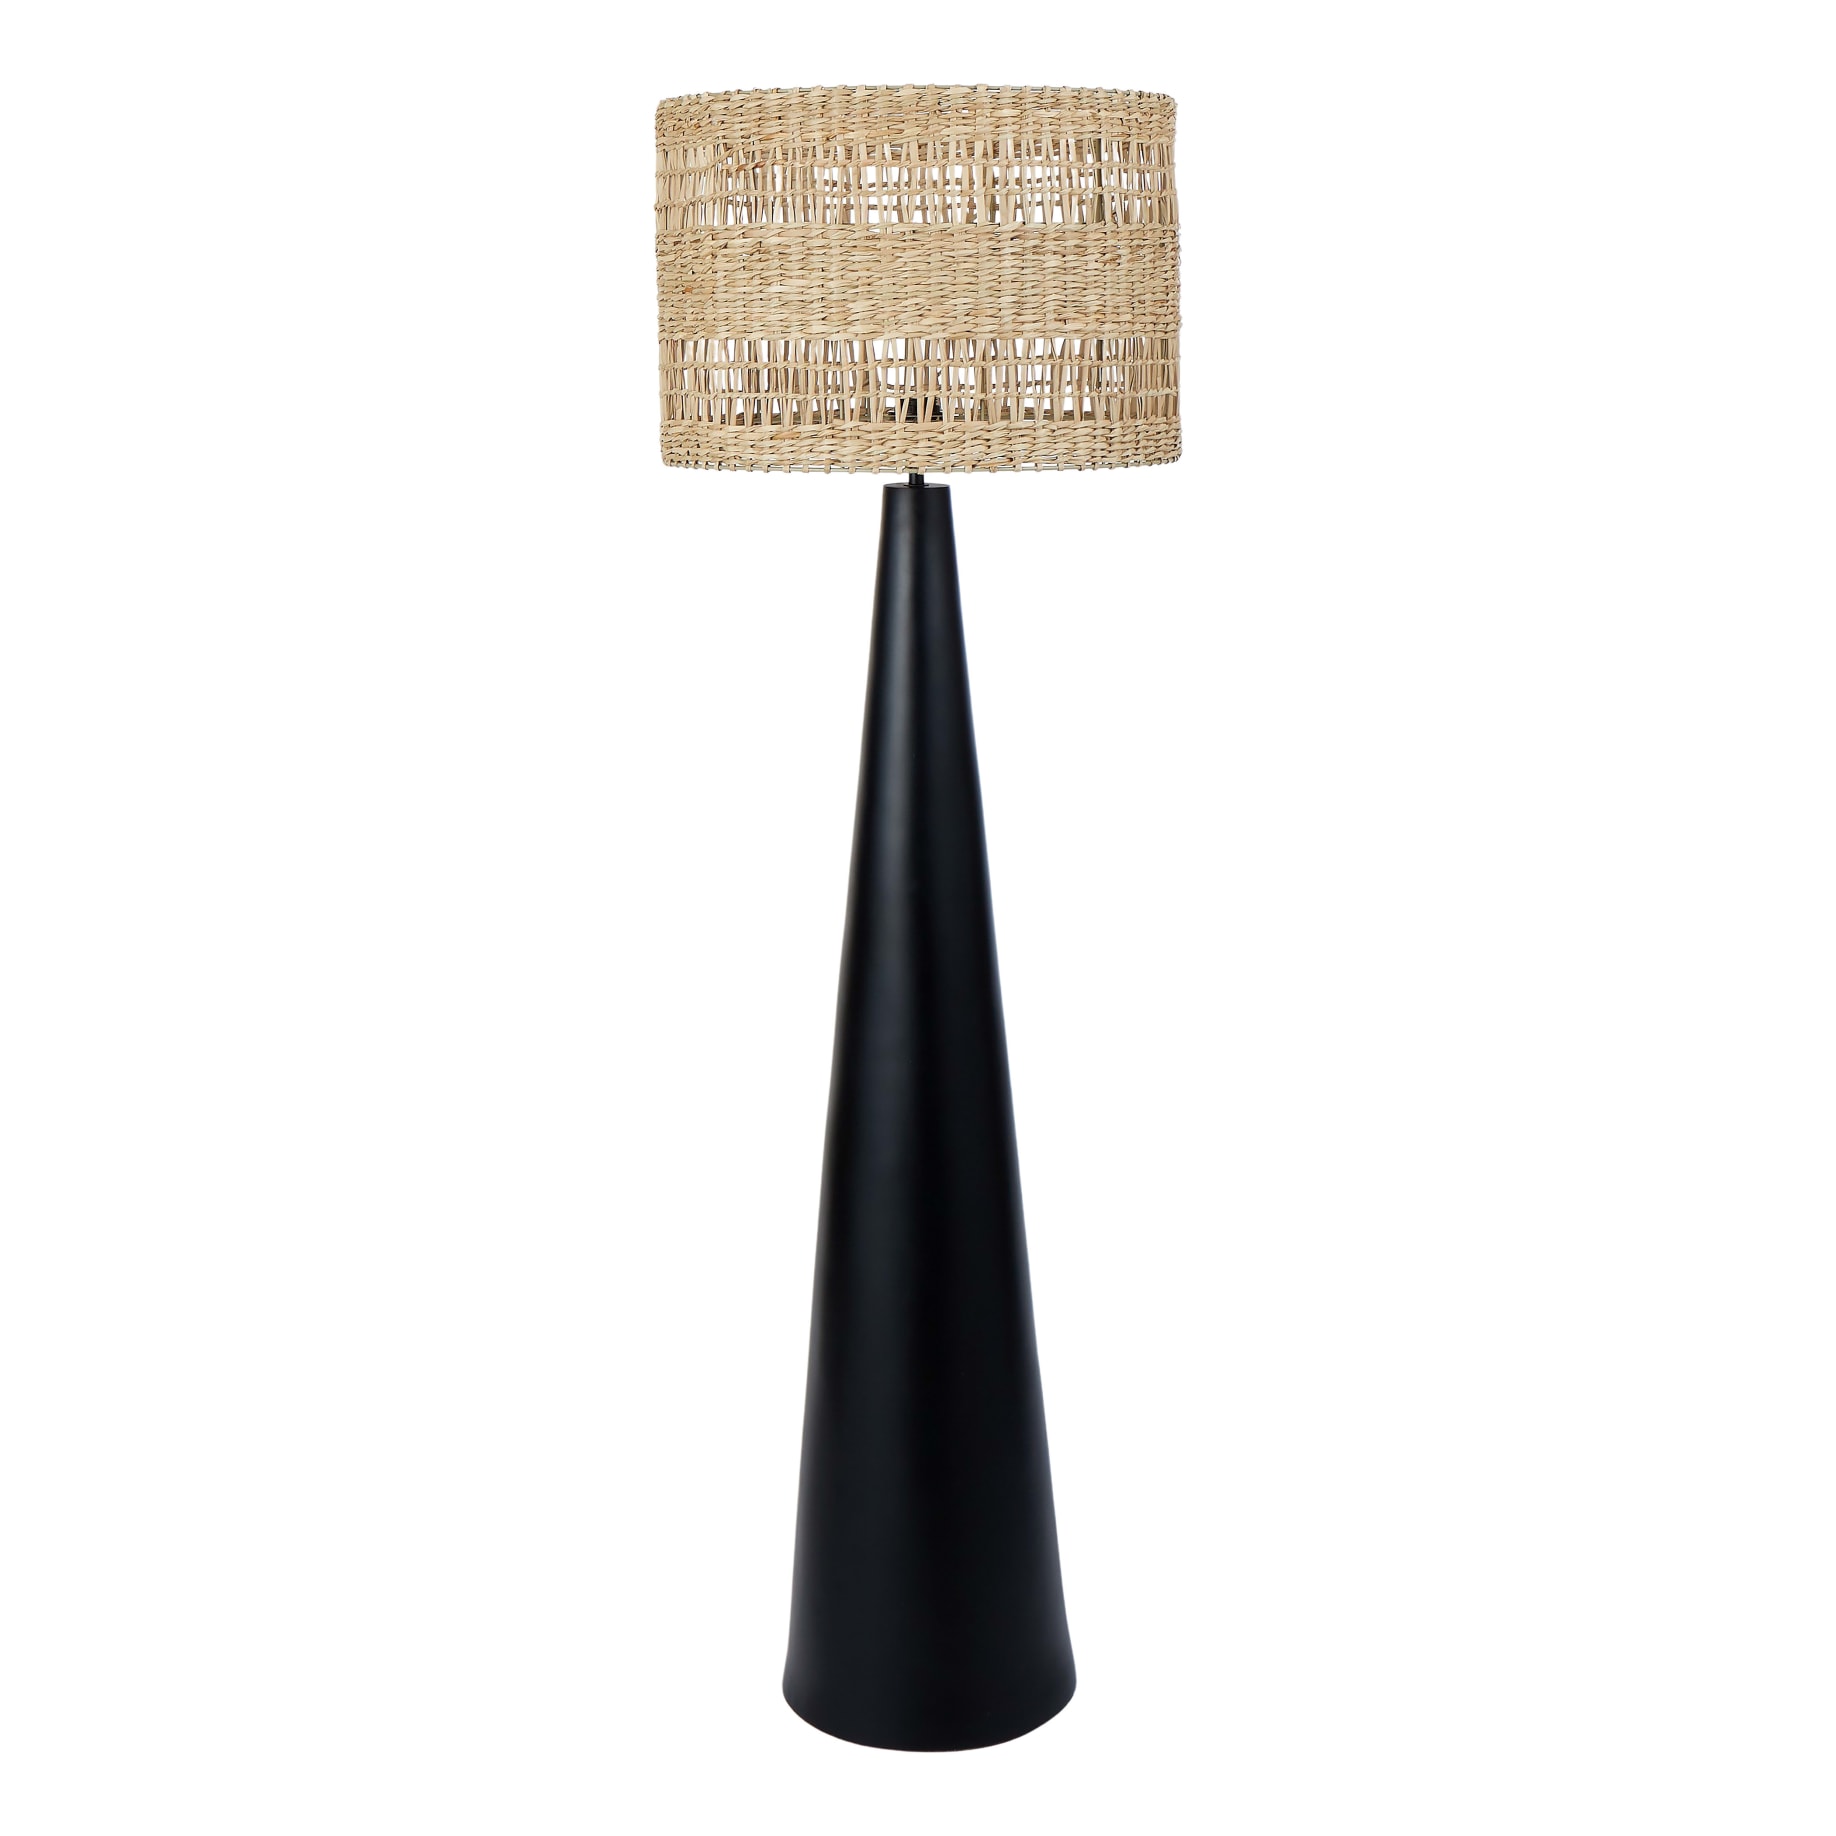 Woven Seagrass Floor Lamp 50x153cm in Black